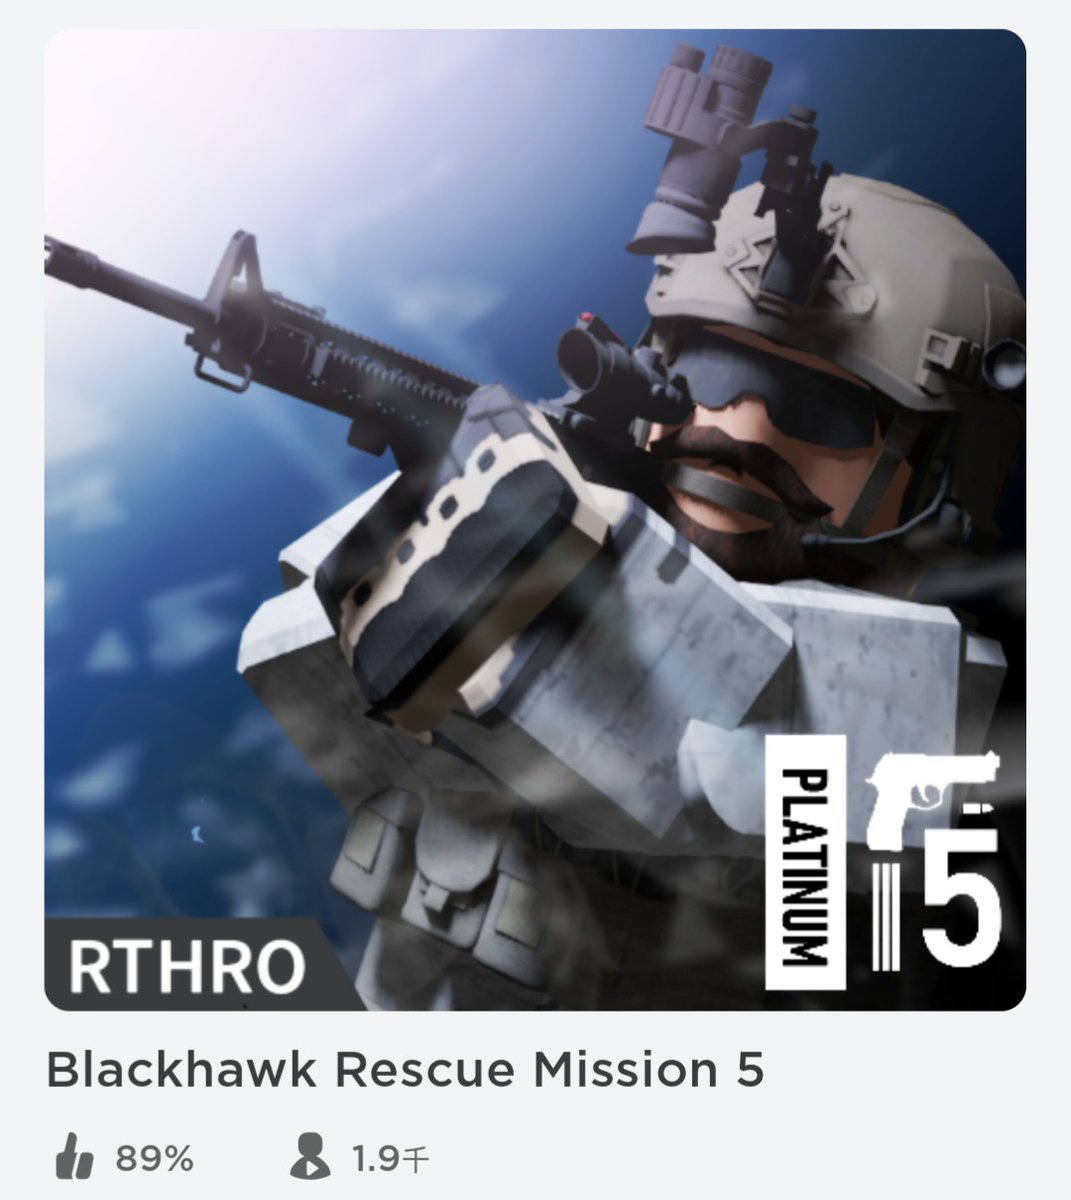 Blackhawkrescuemission5 Hashtag On Twitter - blackhawk rescue mission 5 roblox